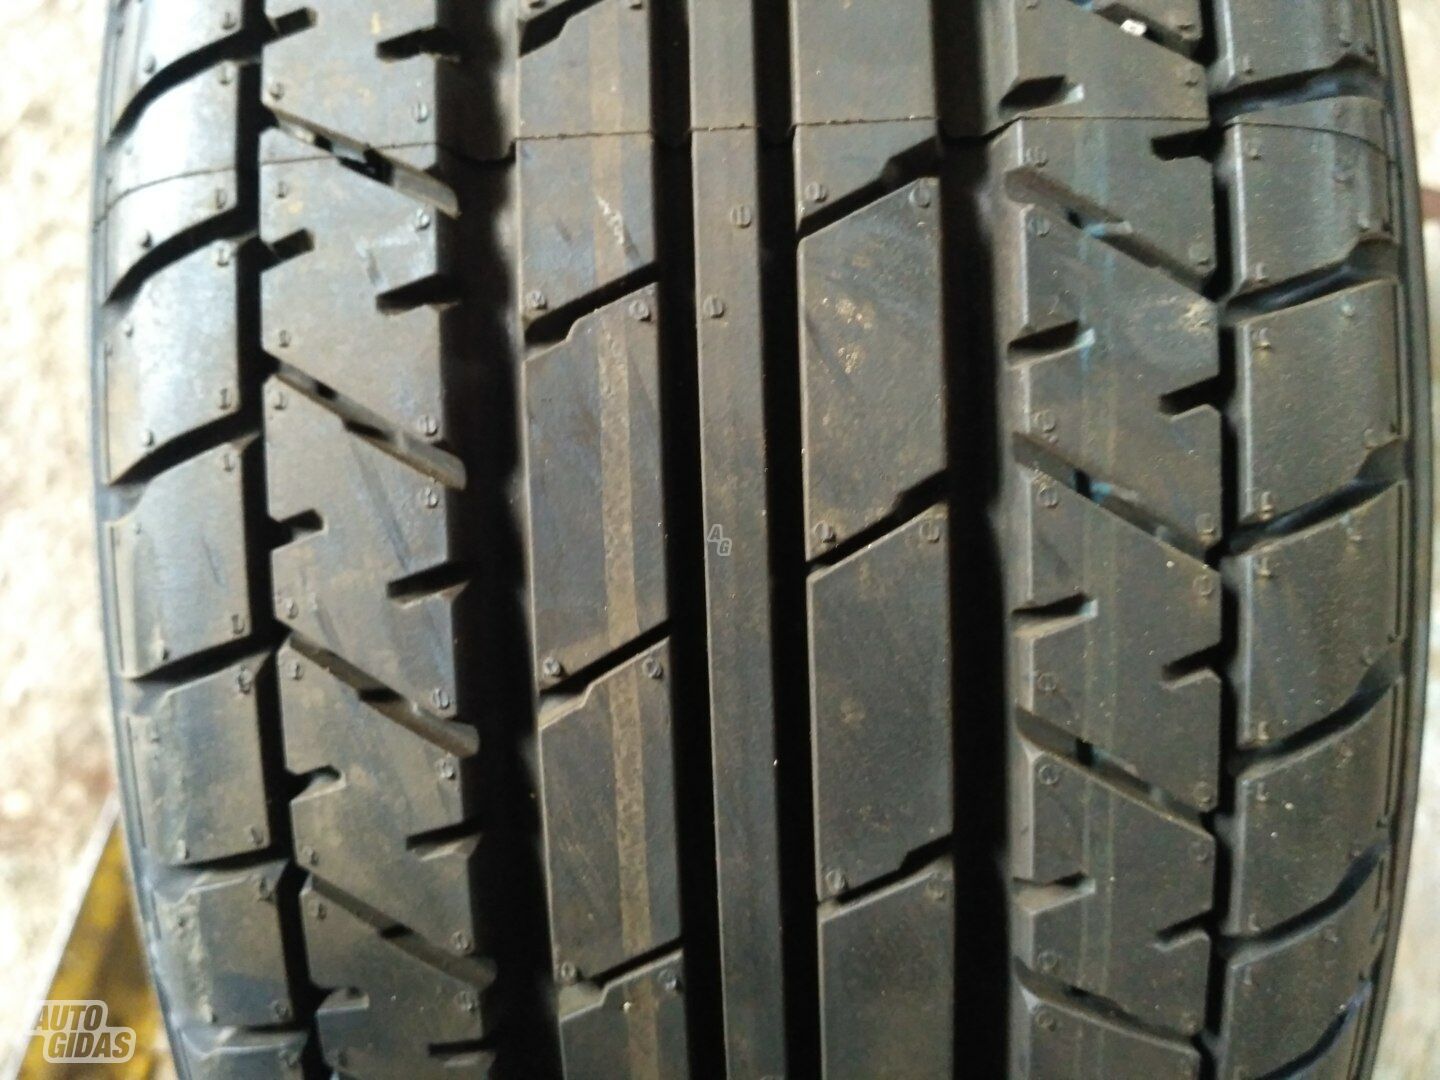 R15 summer tyres passanger car